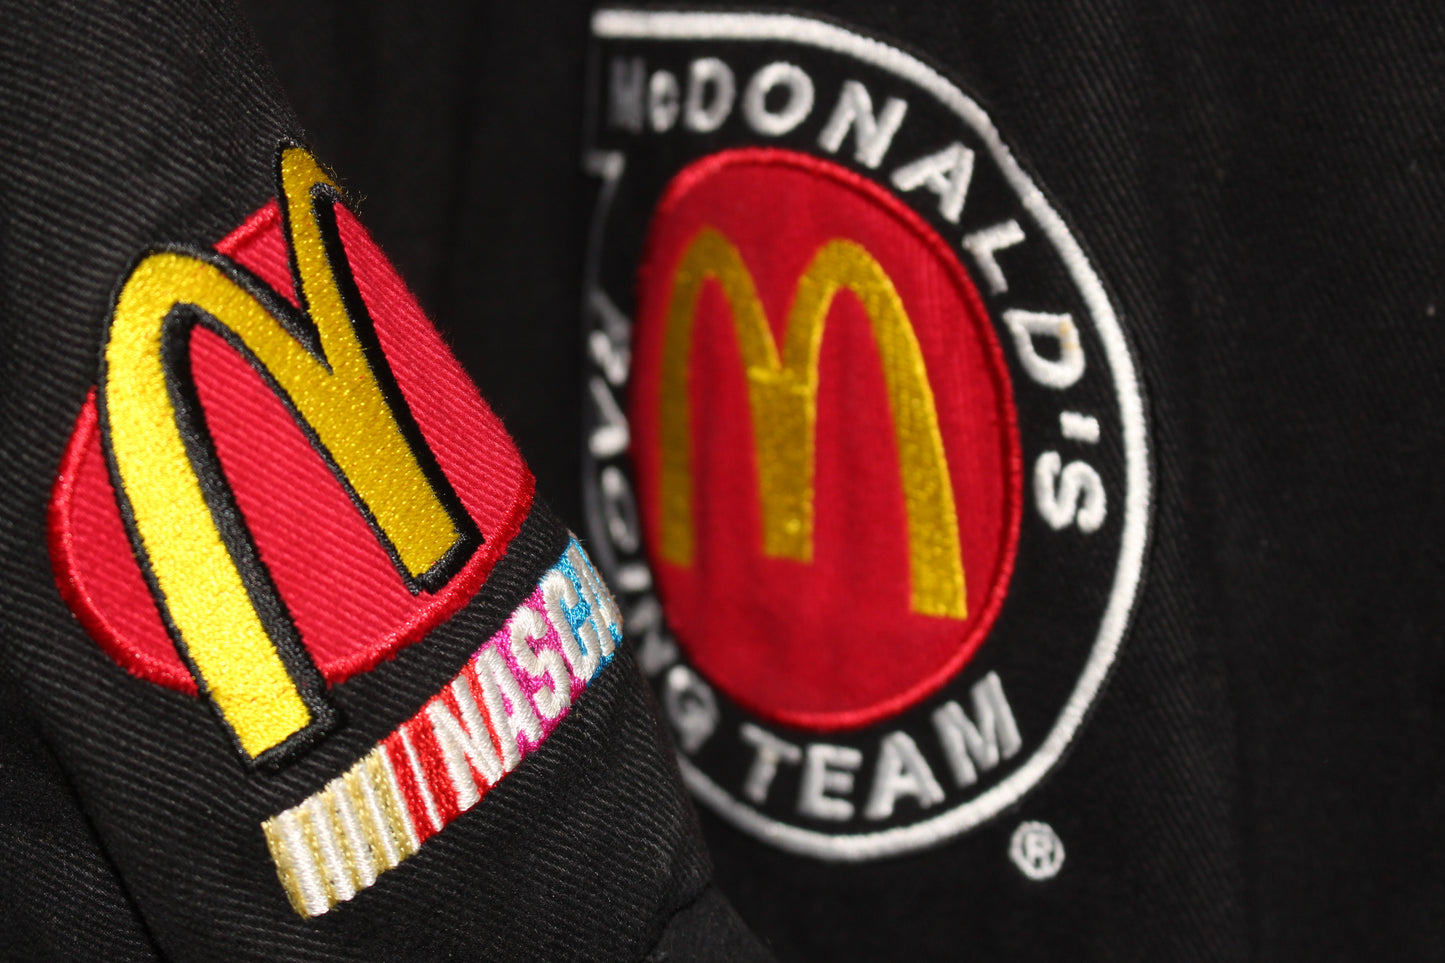 McDonald’s Racing NASCAR Bill Elliott #94 Logo Athletic (L)